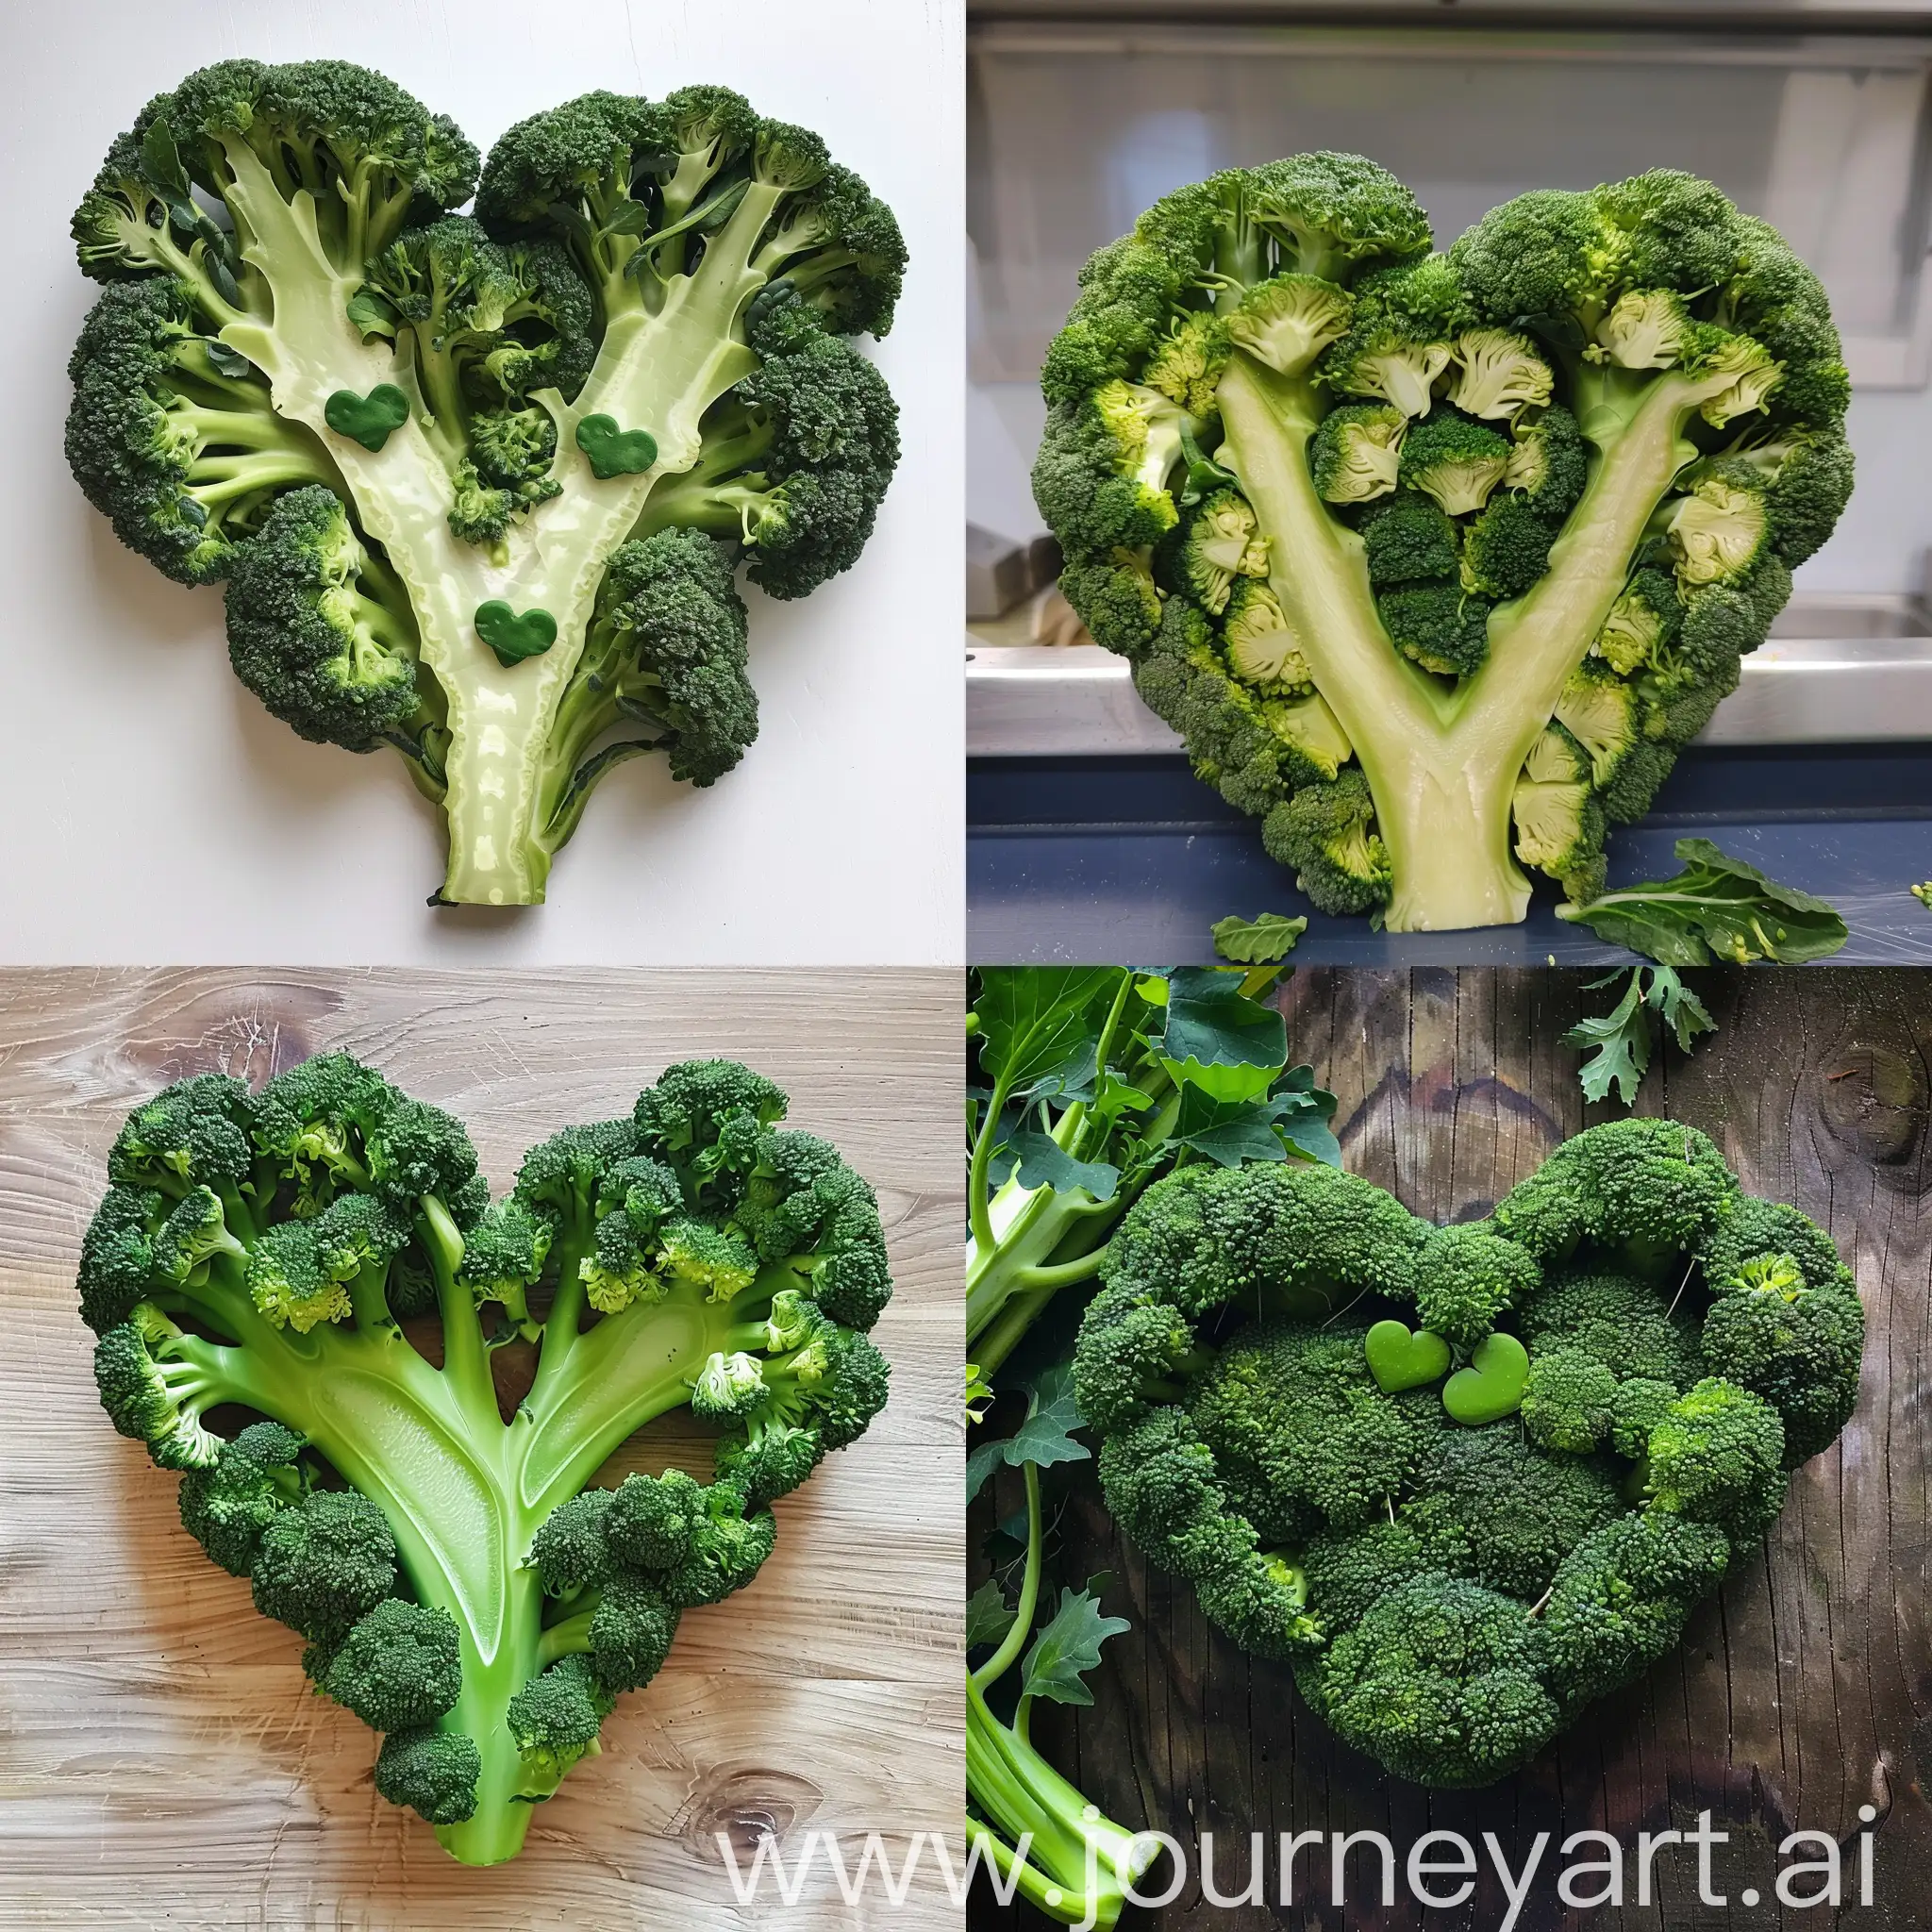 Heart-shaped broccoli